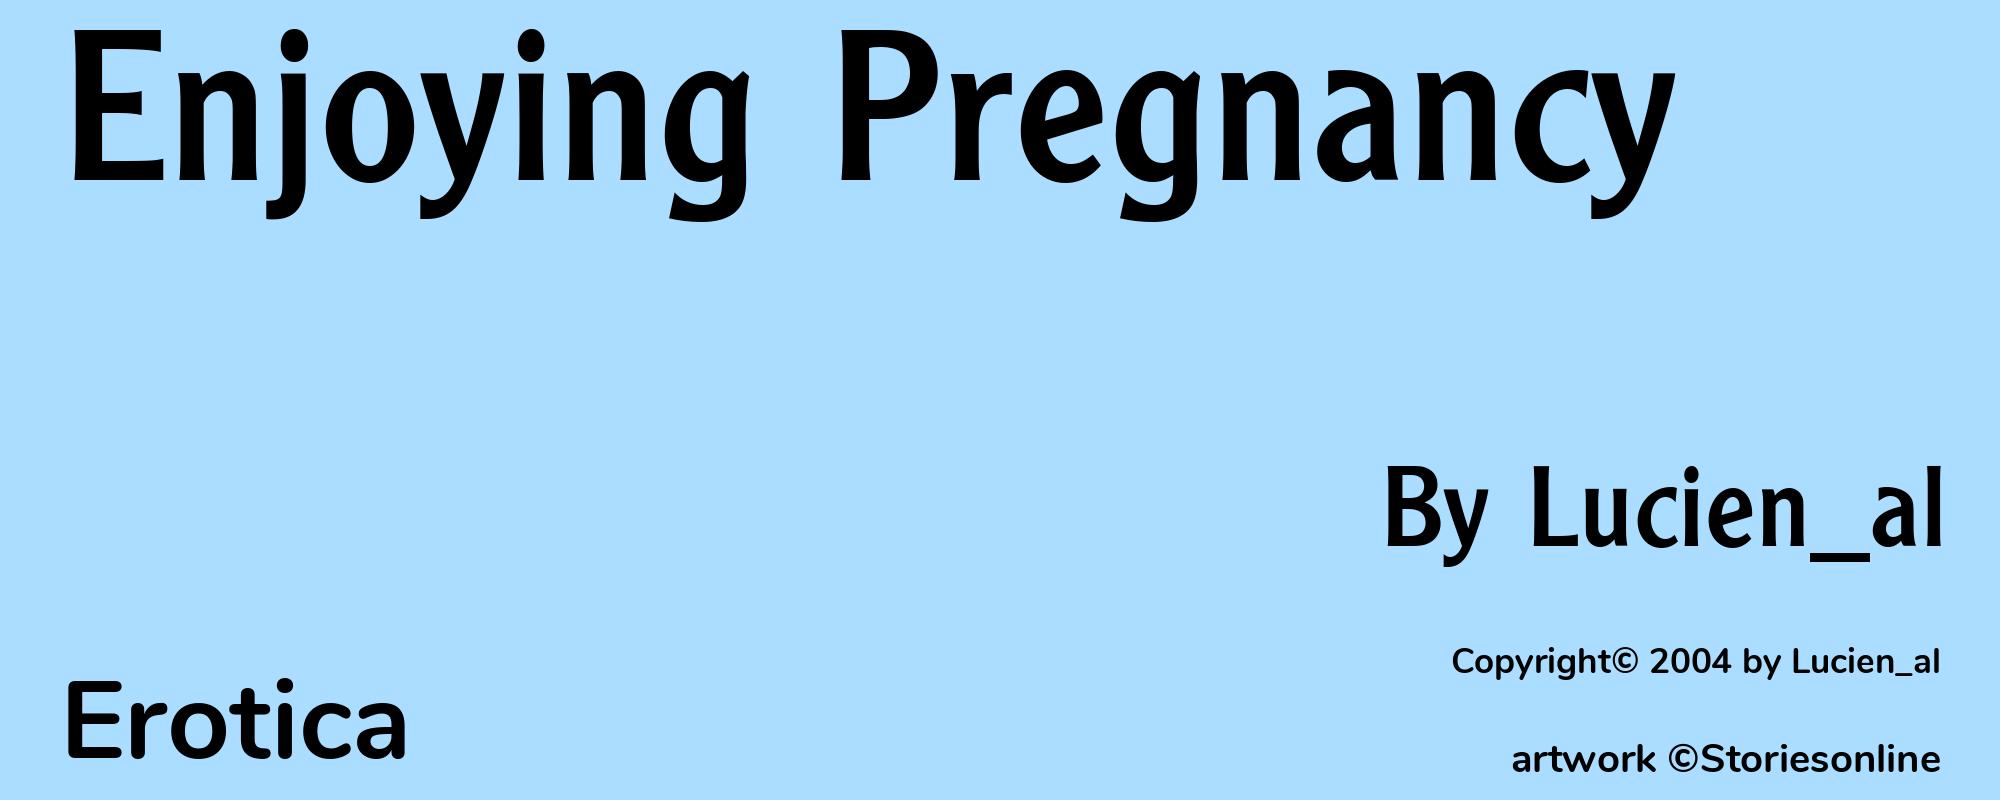 Enjoying Pregnancy - Cover